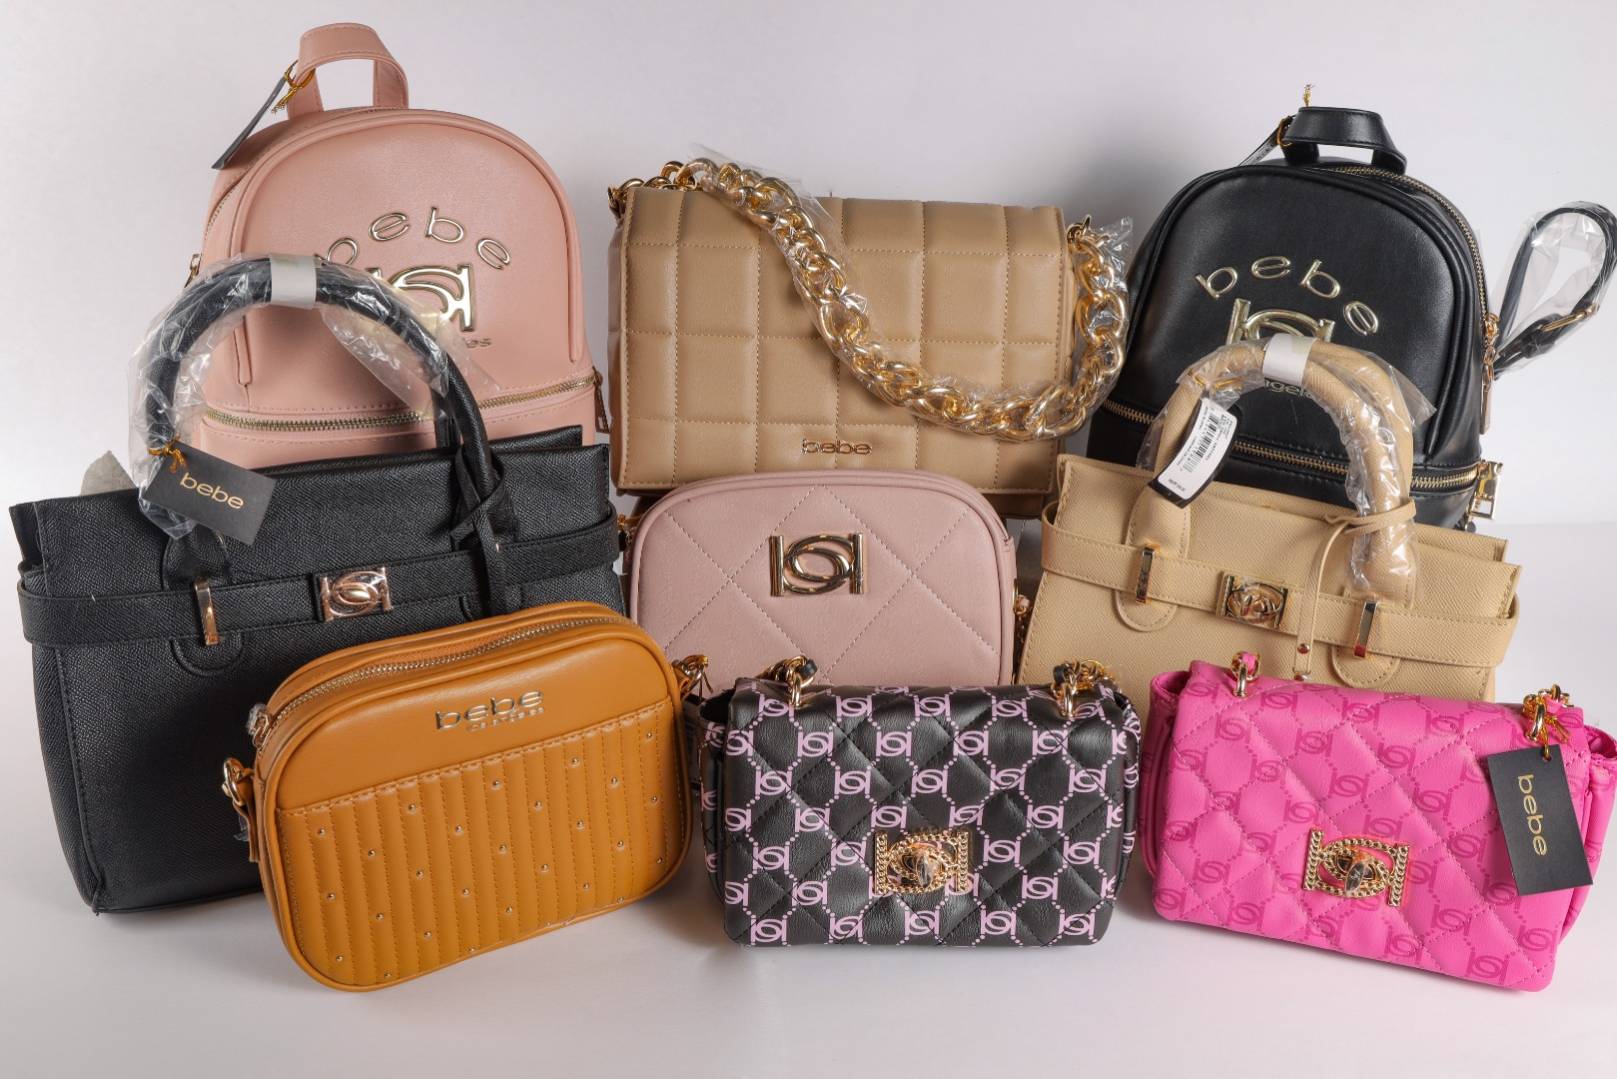 Via Trading  Assorted Bebe New Overstock Handbags Loads